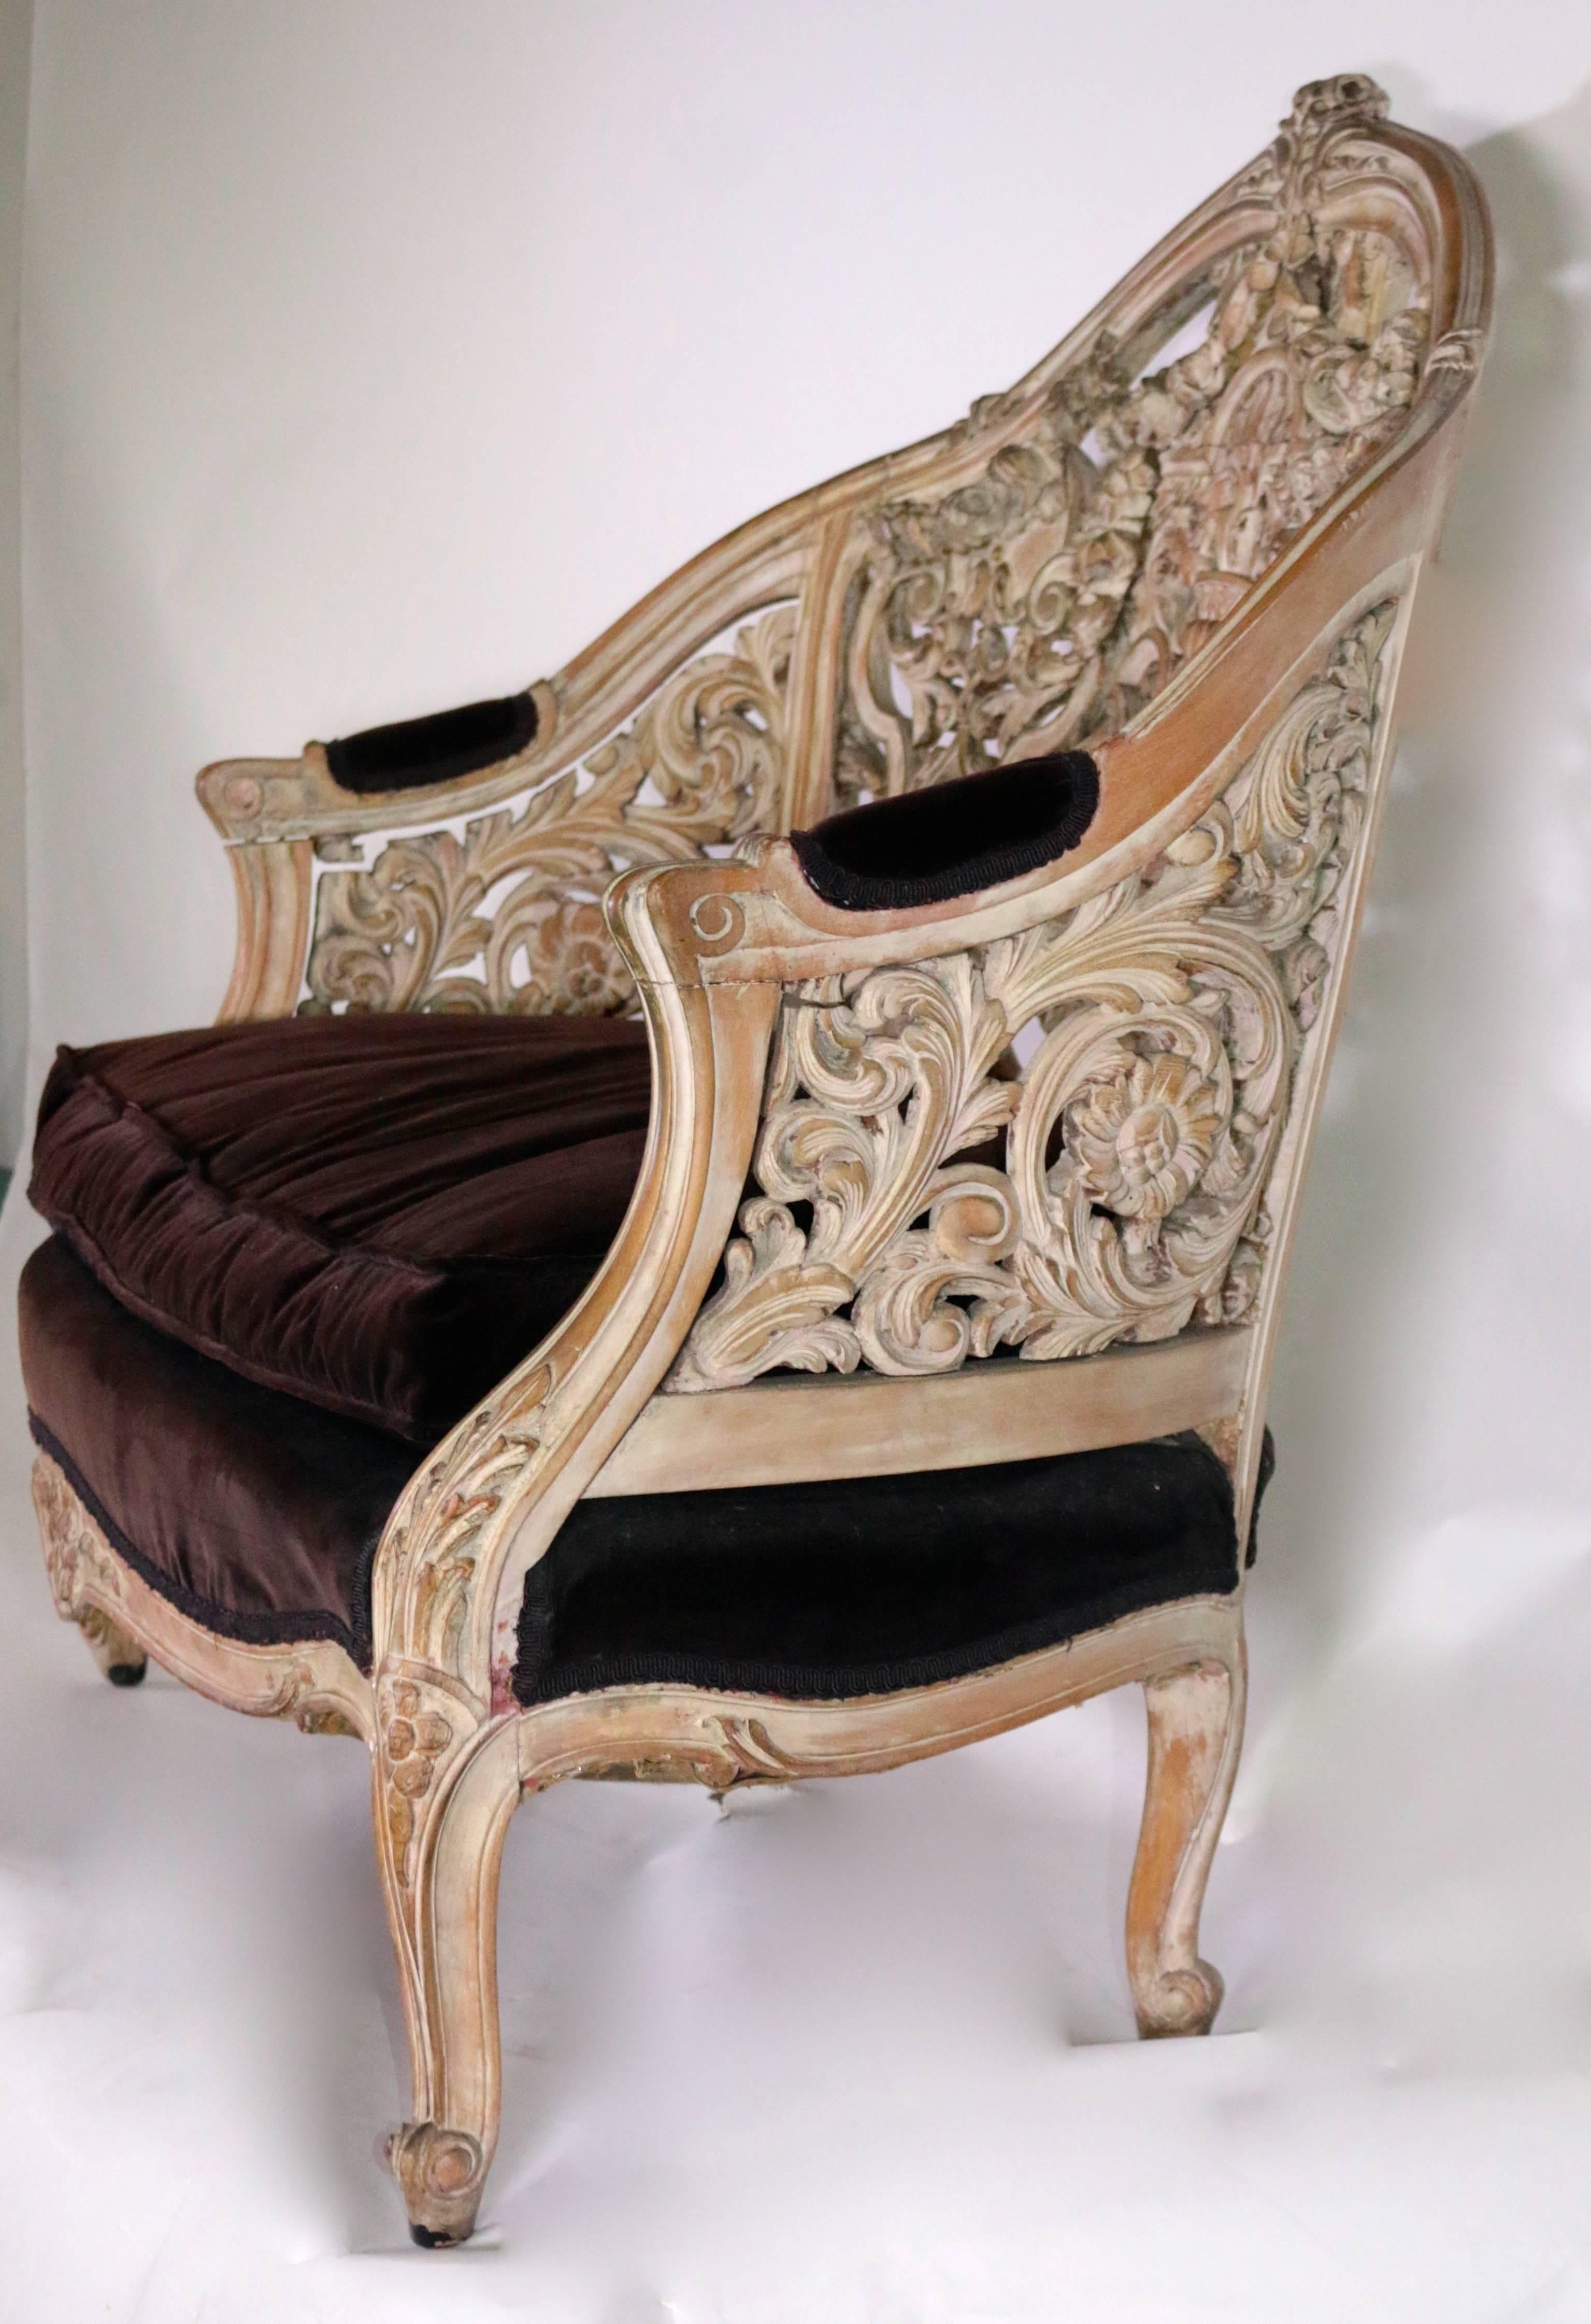 Early 19th century heavily hand-carved Italian Baroque pickled beige wood settee sofa.
Velvet appositely.